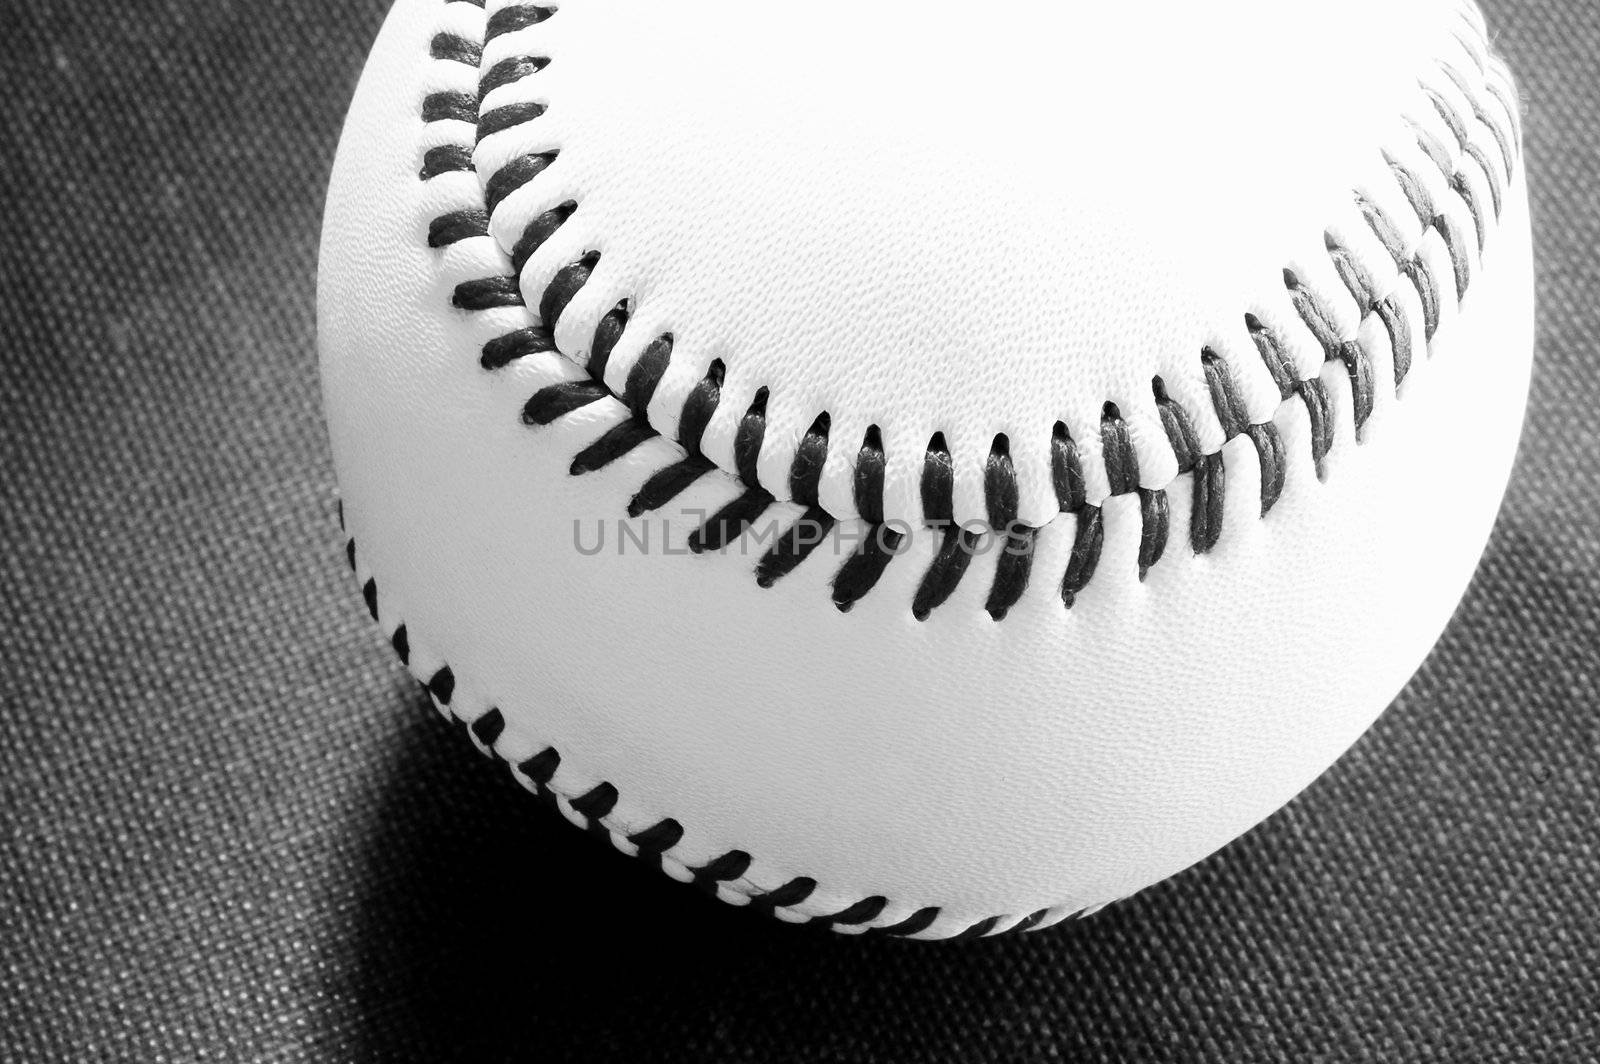 Baseball in black and white.